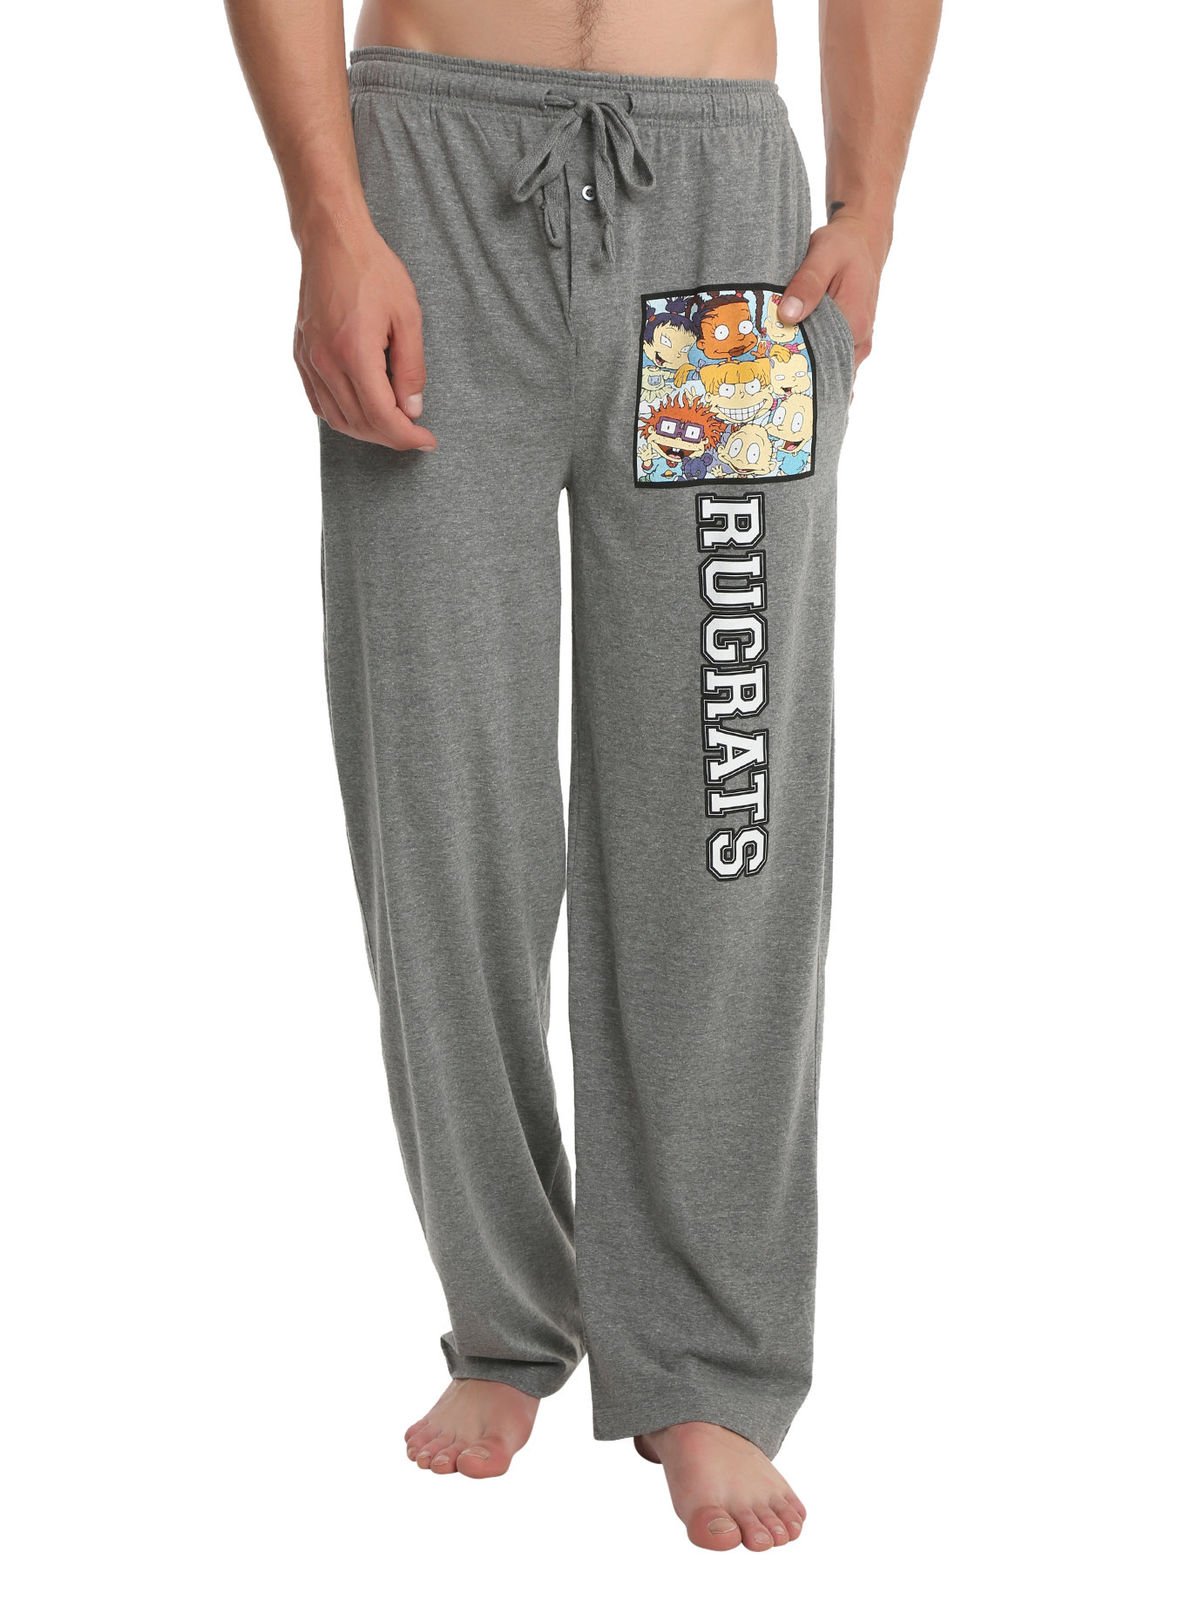 Mens Women New Gray Rugrats Babies Pajama Lounge Pants Size XS-L | eBay